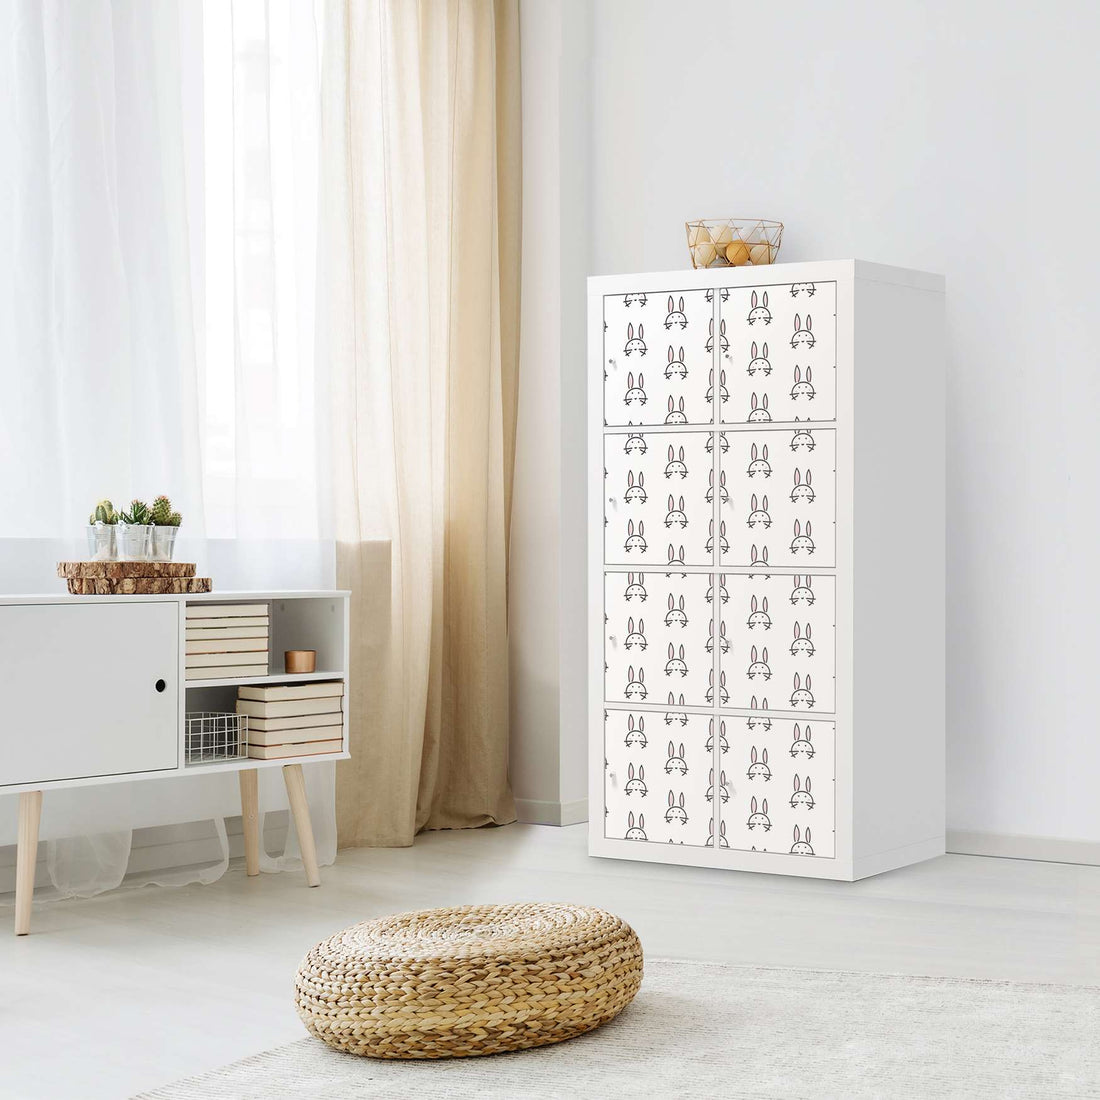 Folie für Möbel Hoppel - IKEA Kallax Regal 8 Türen - Kinderzimmer